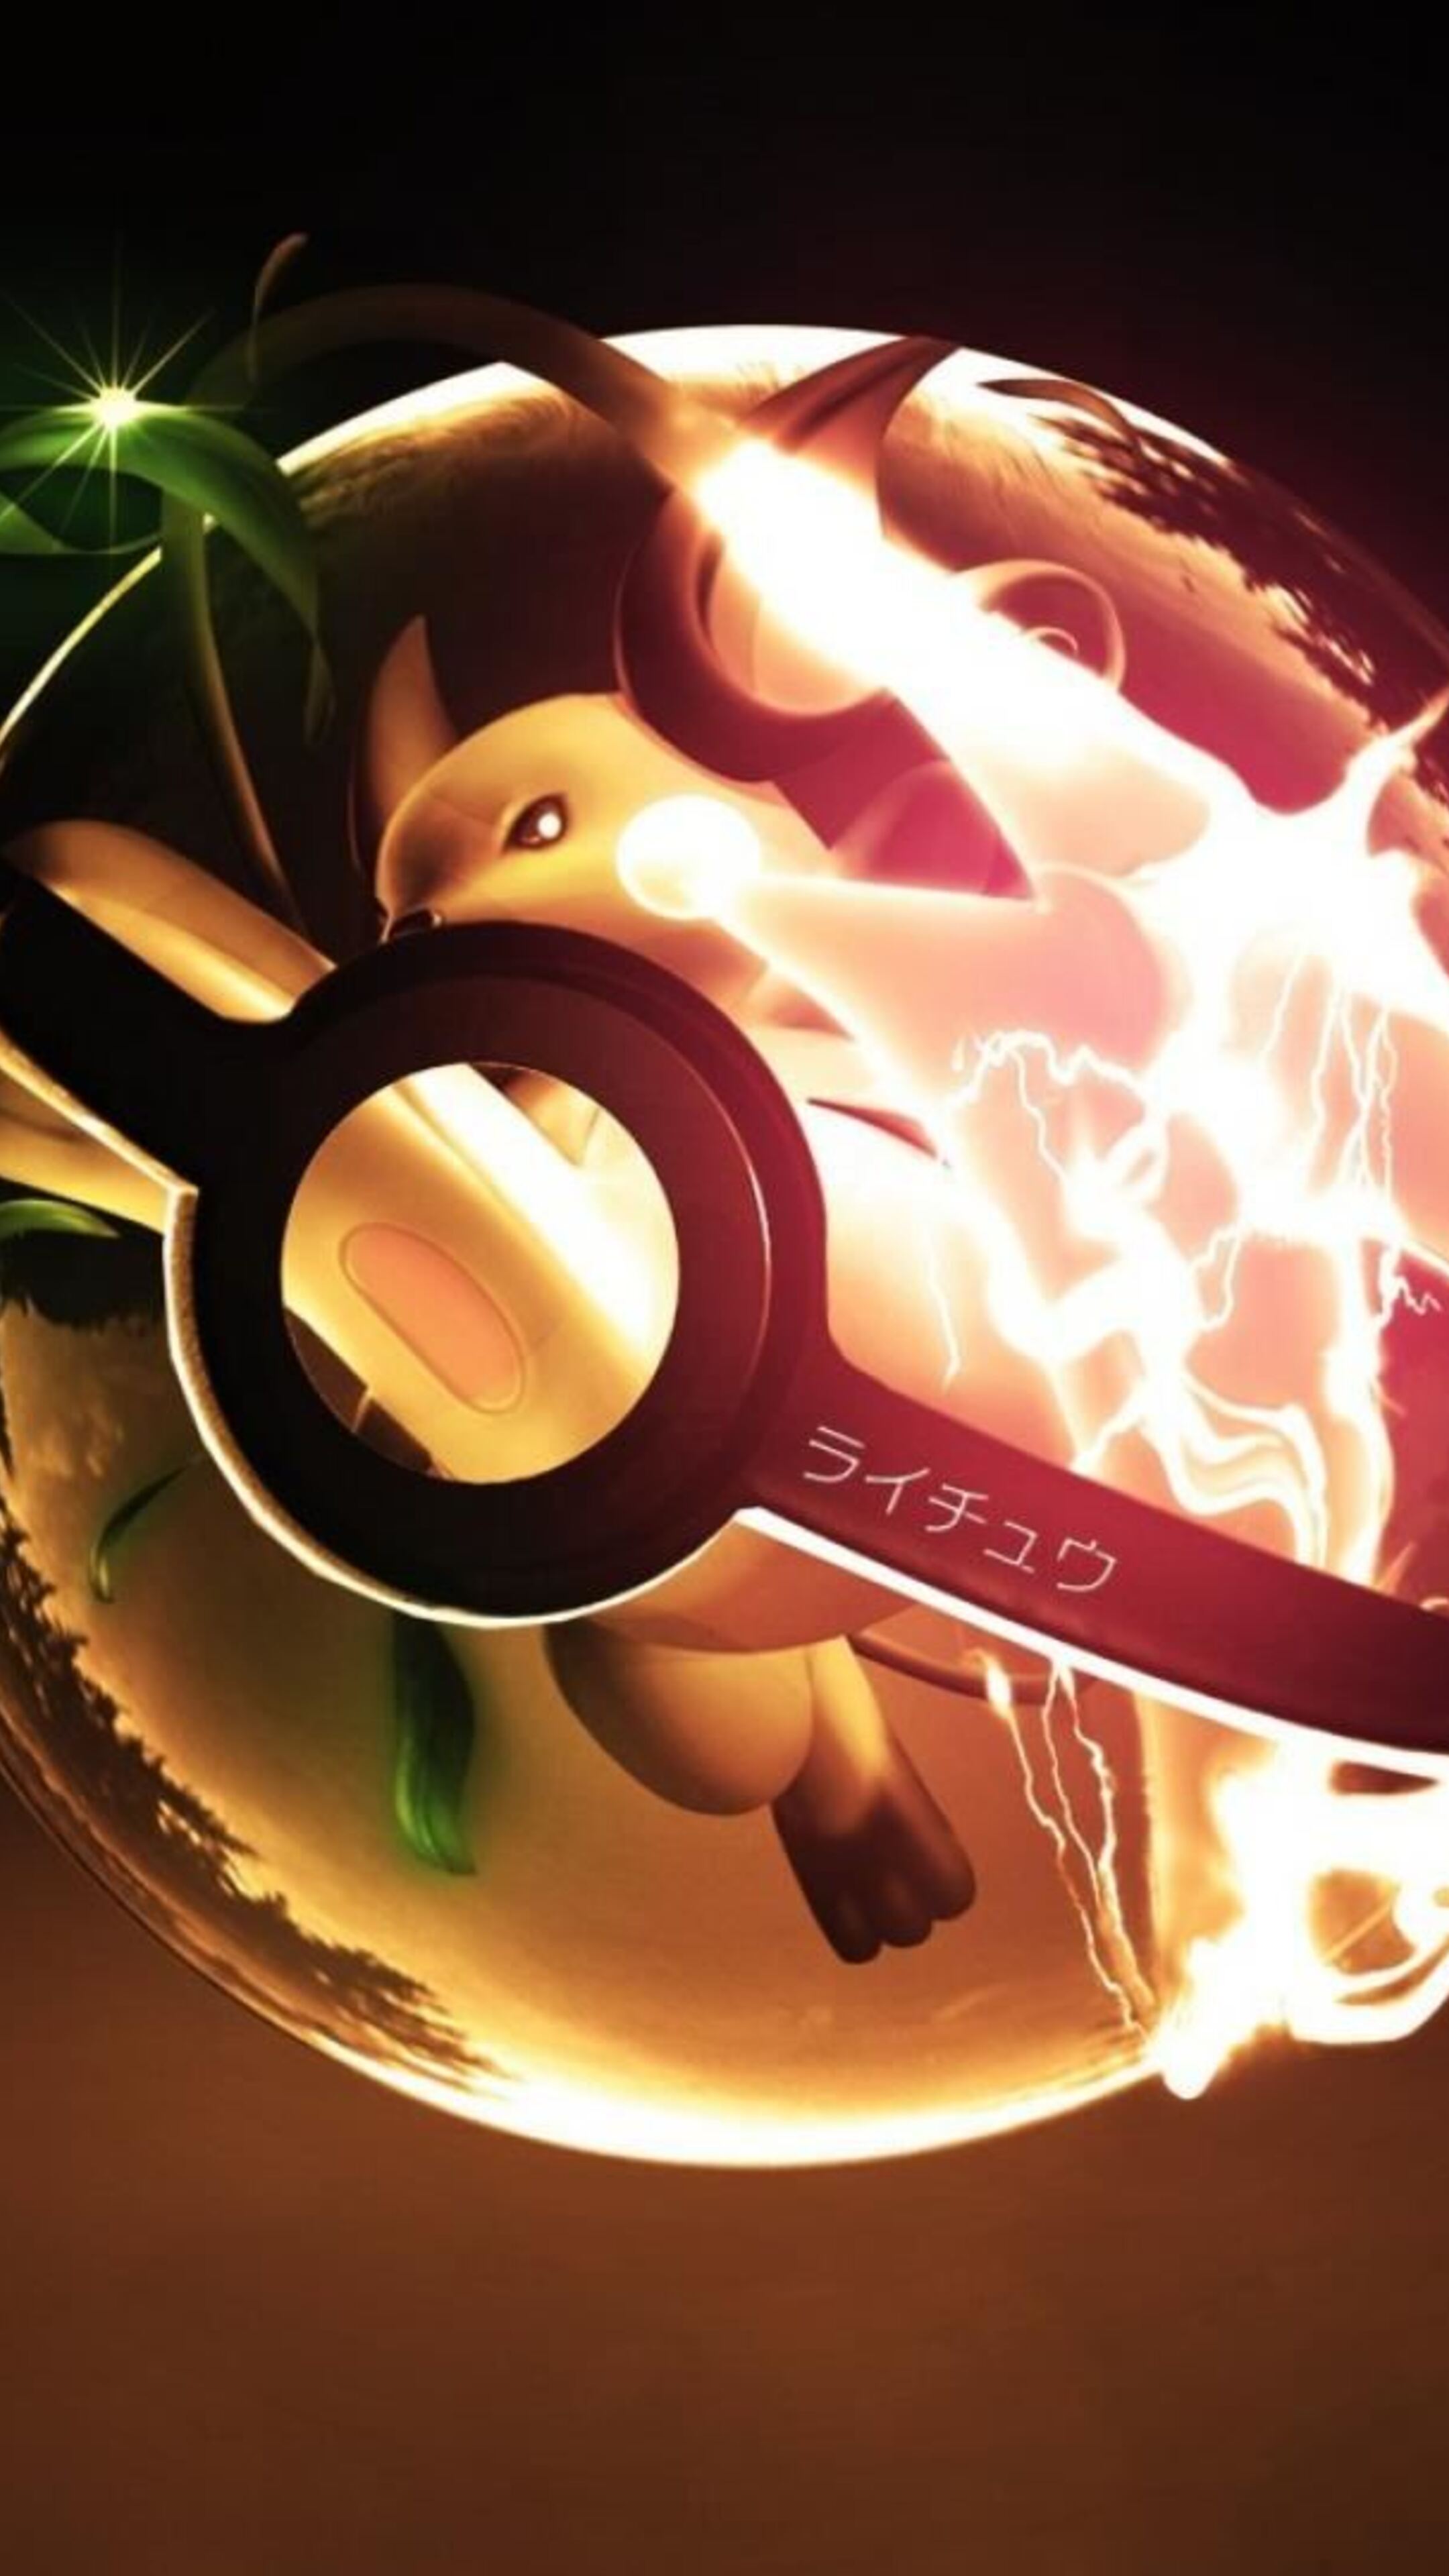 Raichu Pokemon Go Sony Xperia X, XZ, Z5 Premium HD 4k Wallpaper, Image, Background, Photo and Picture